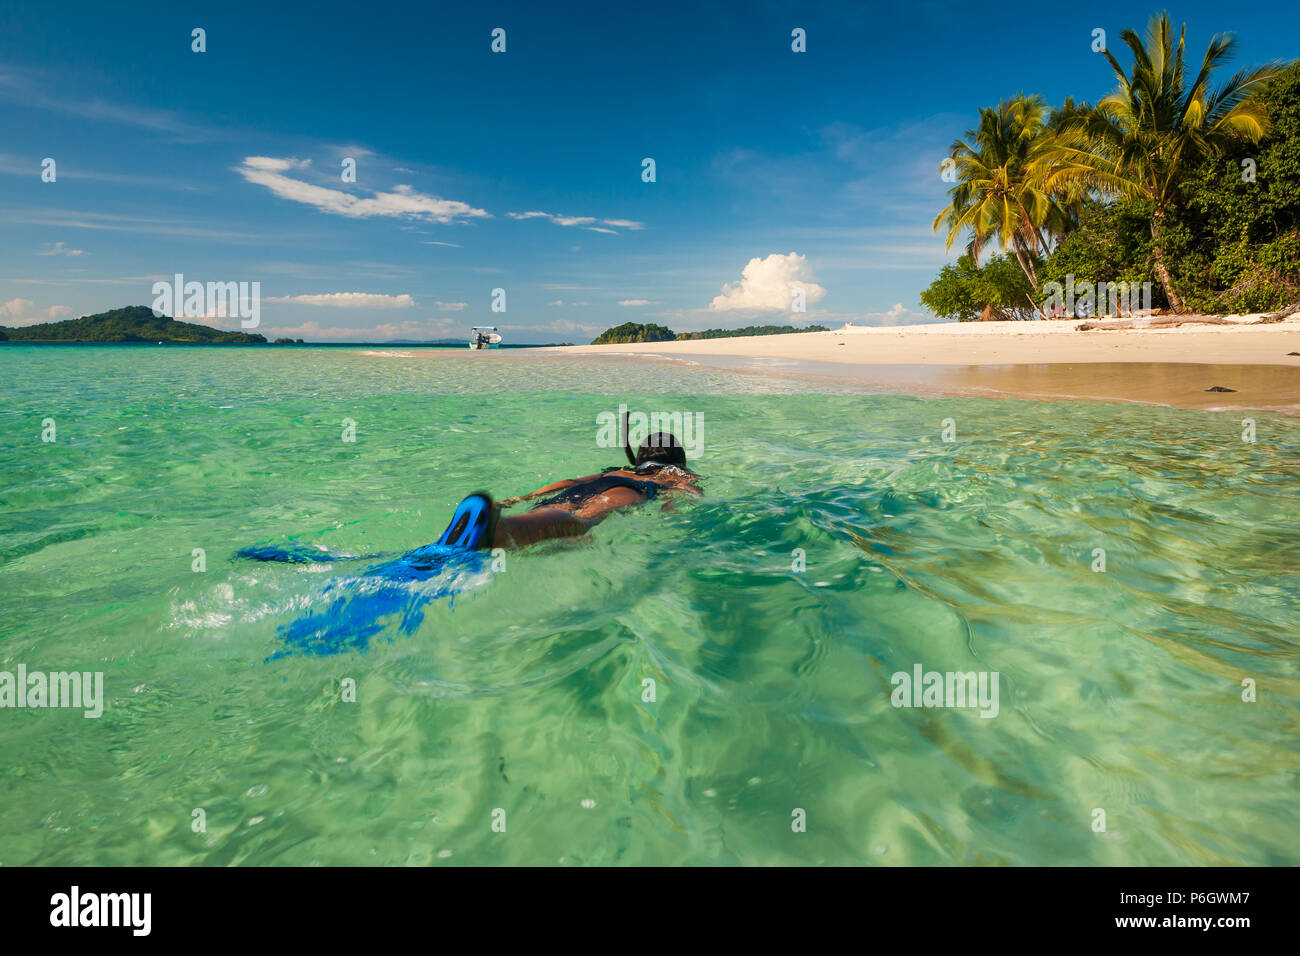 Scuba diving at Coiba island national park, Pacific coast, Veraguas province, Republic of Panama. Stock Photo